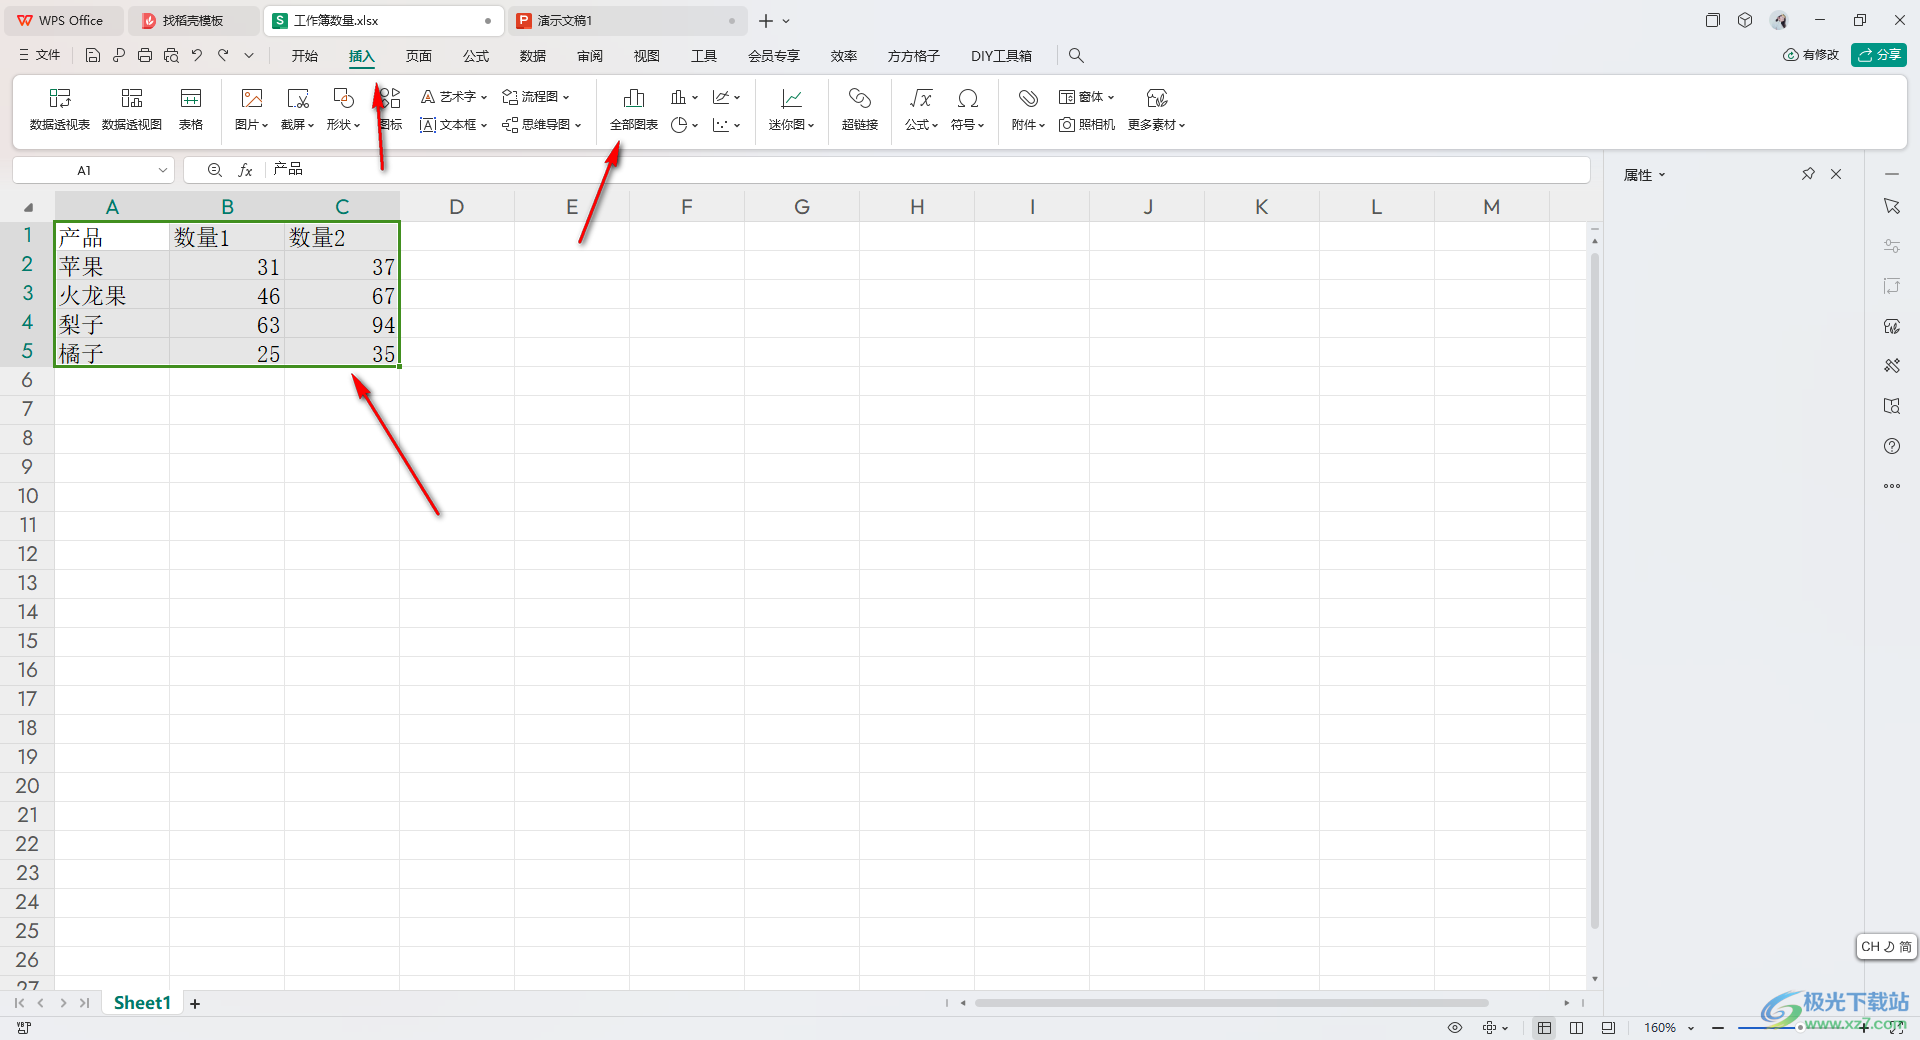 WPS Excel表里根据现有数据插入圆柱图的方法